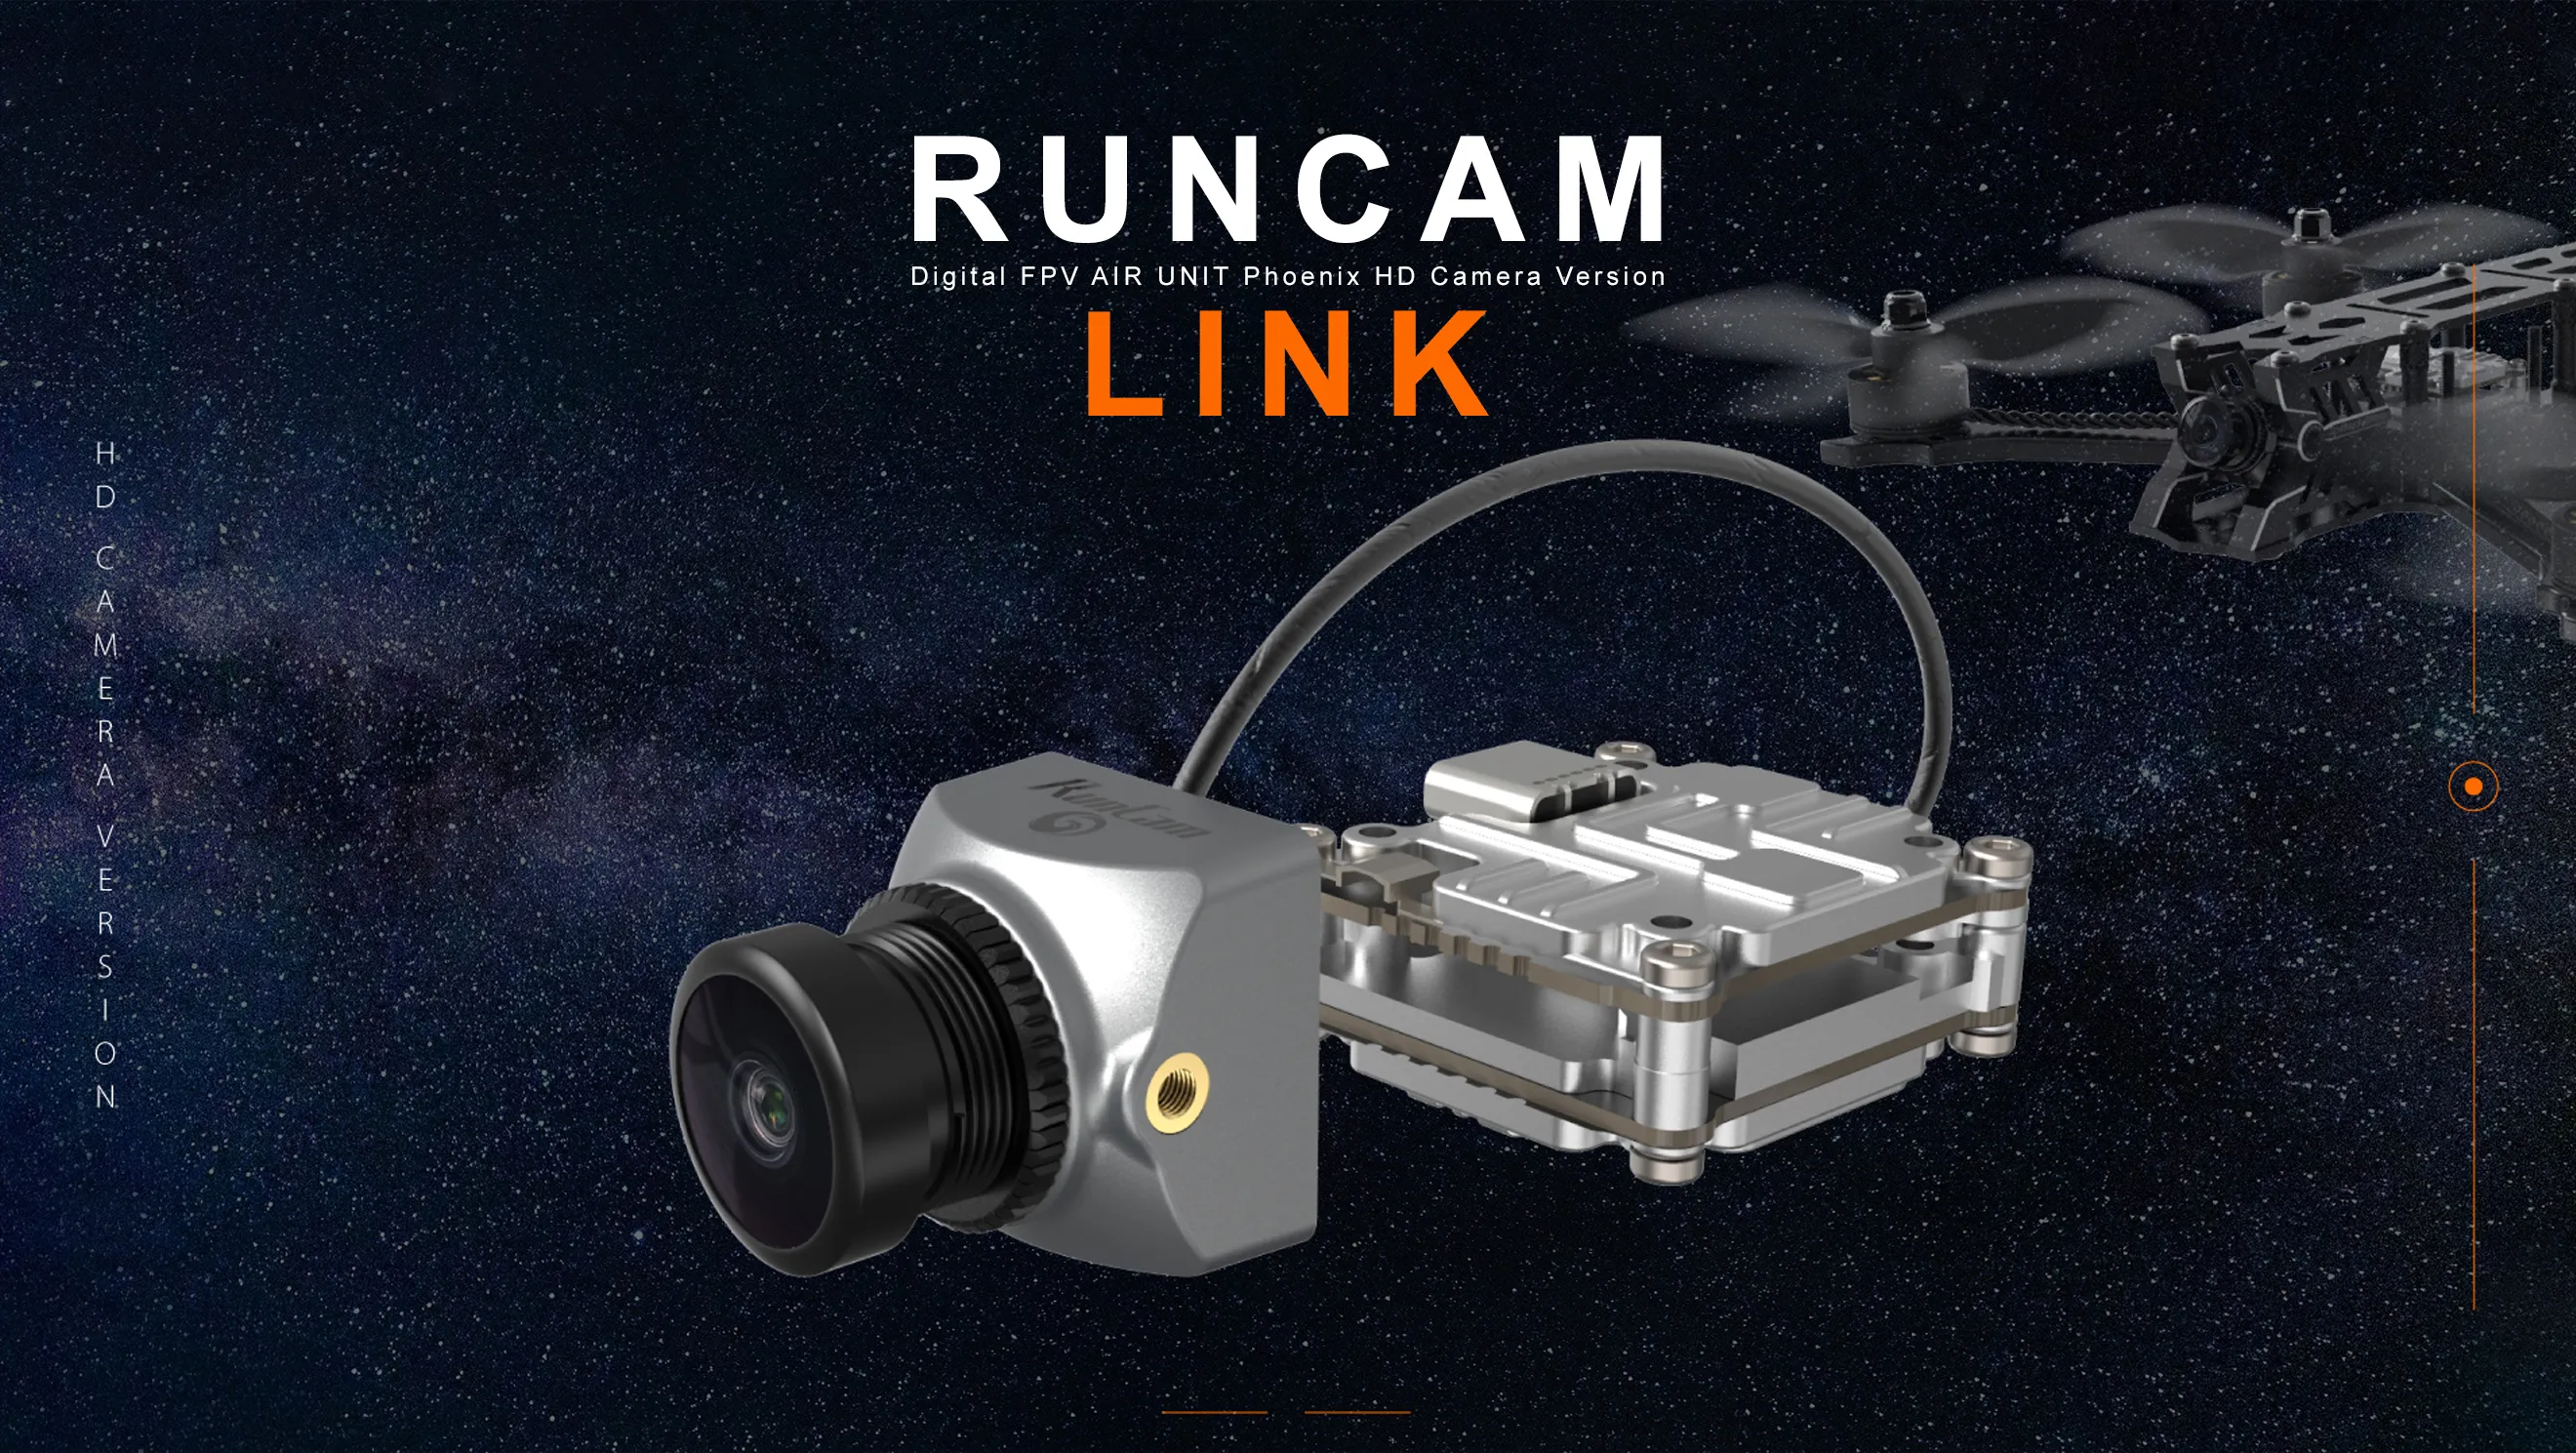 Runcam Link Phoenix HD Kit with high quality